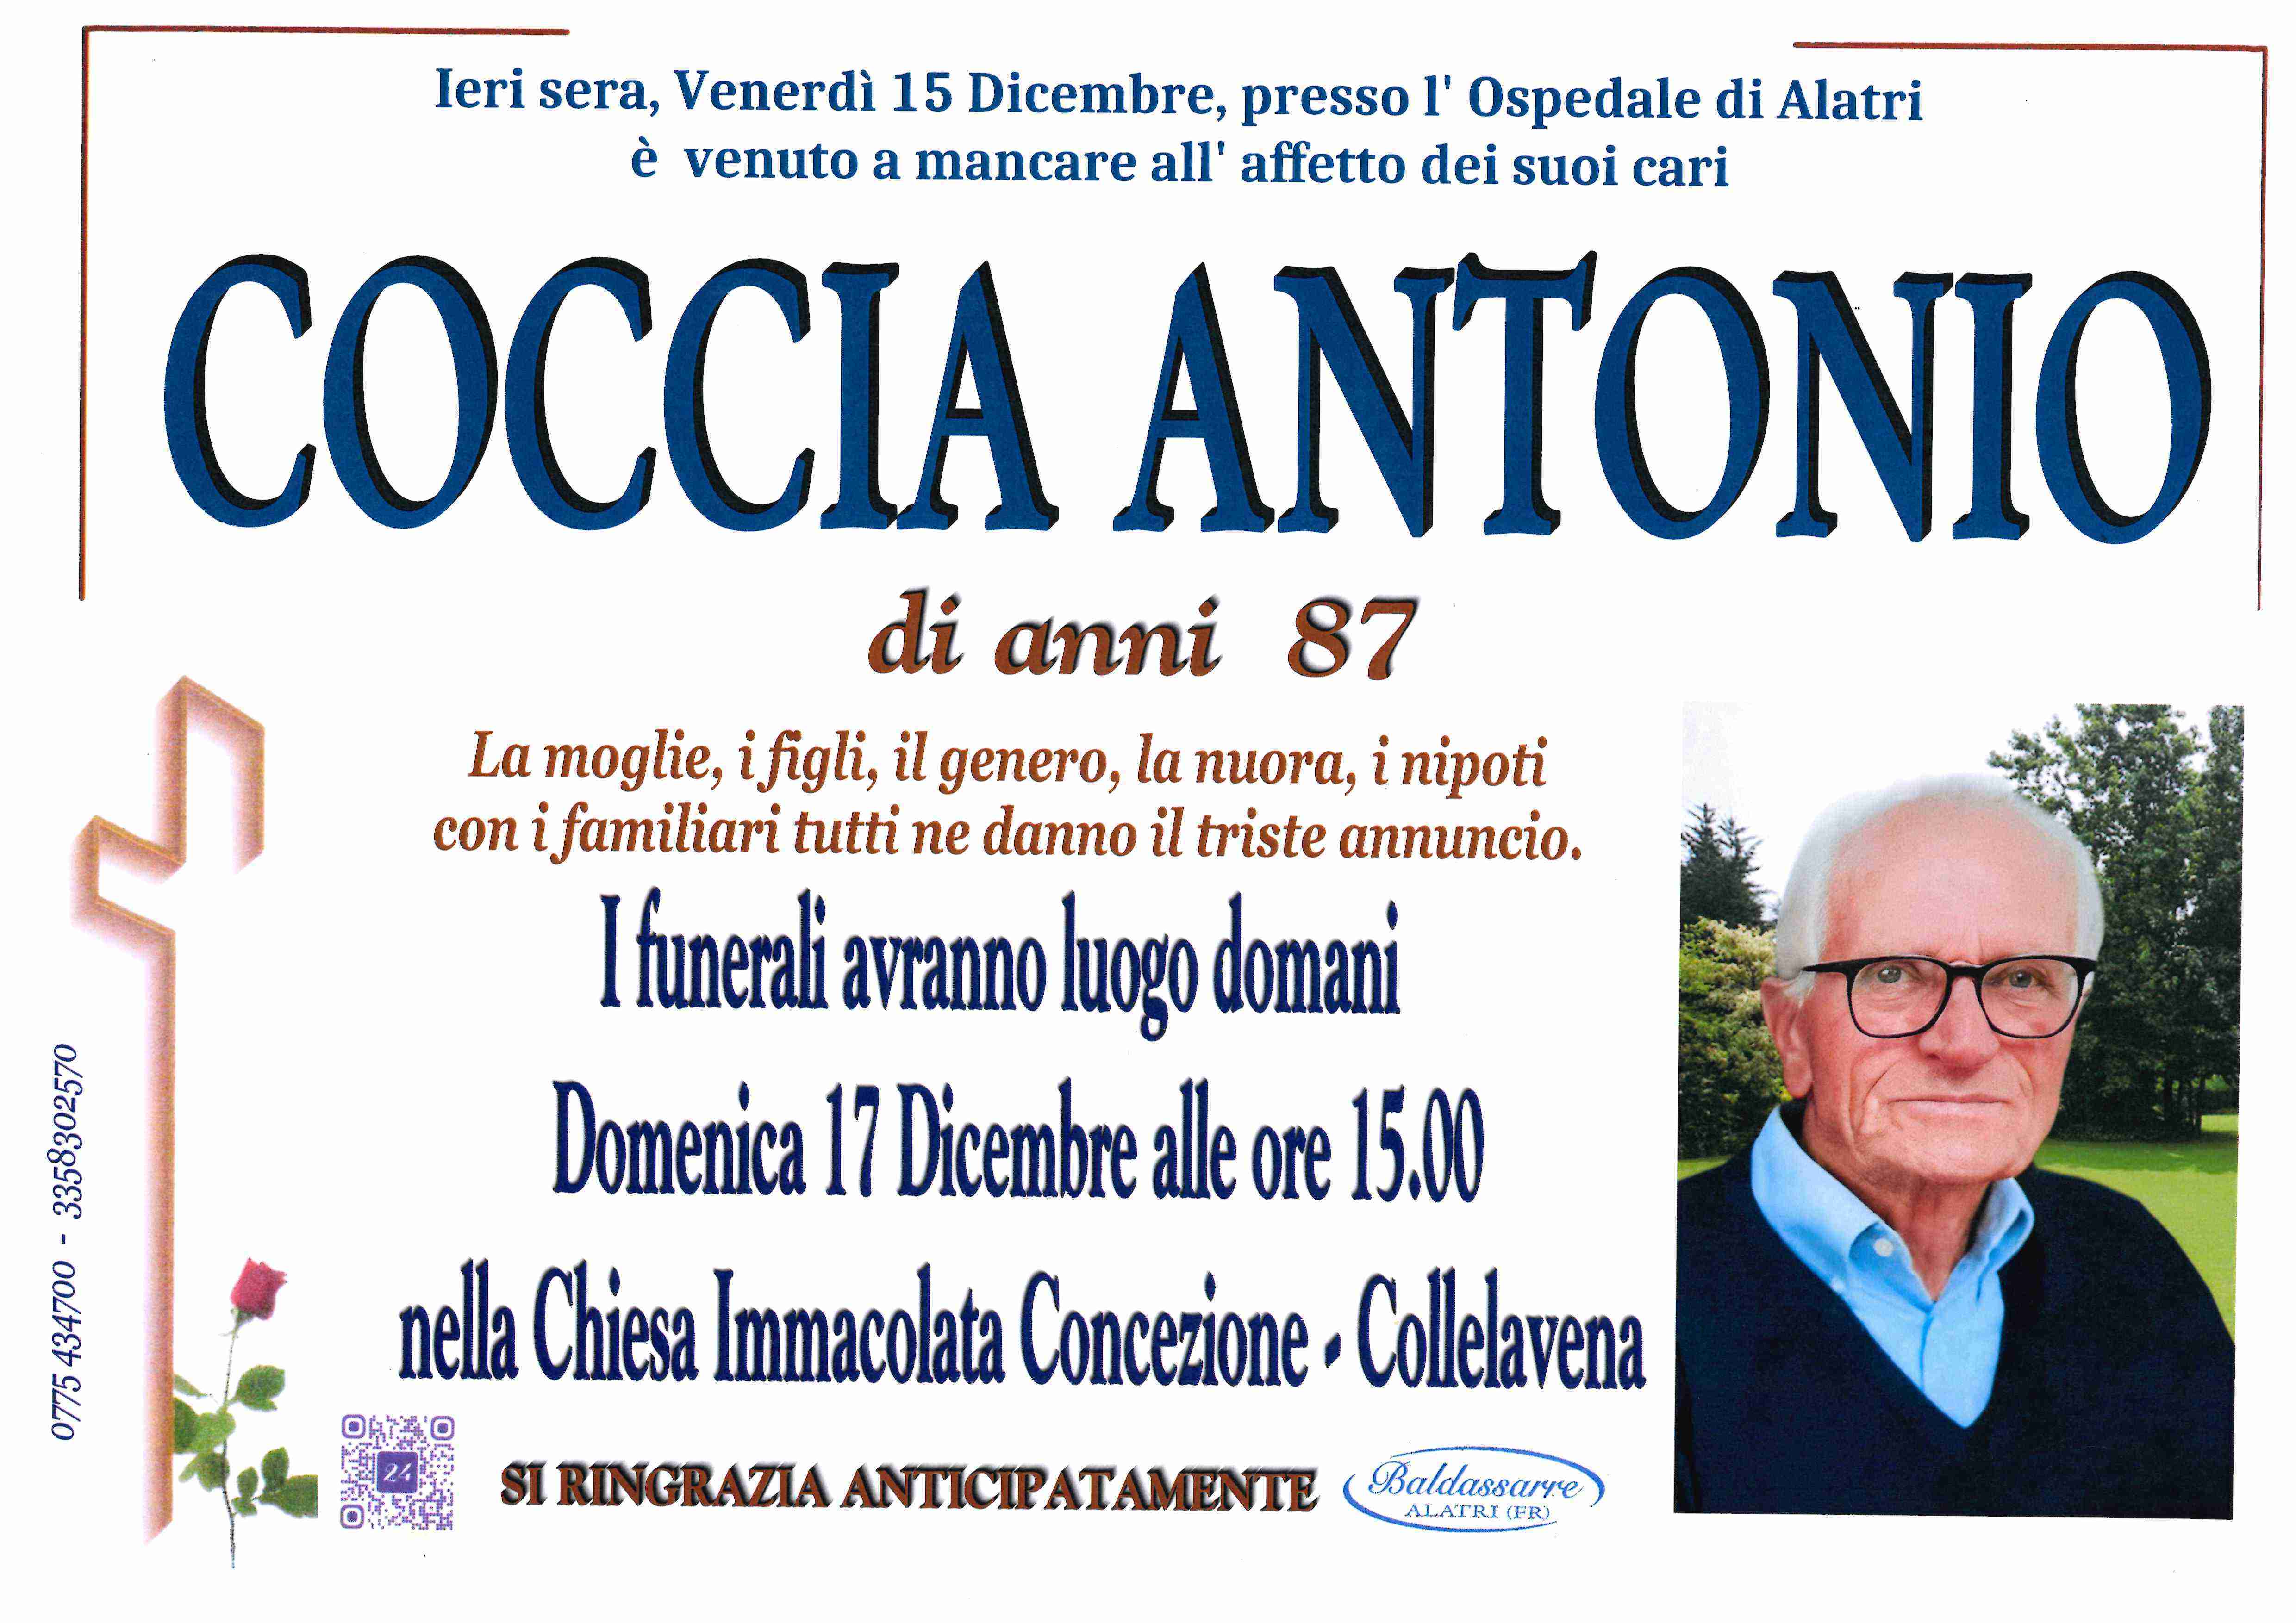 Antonio Coccia